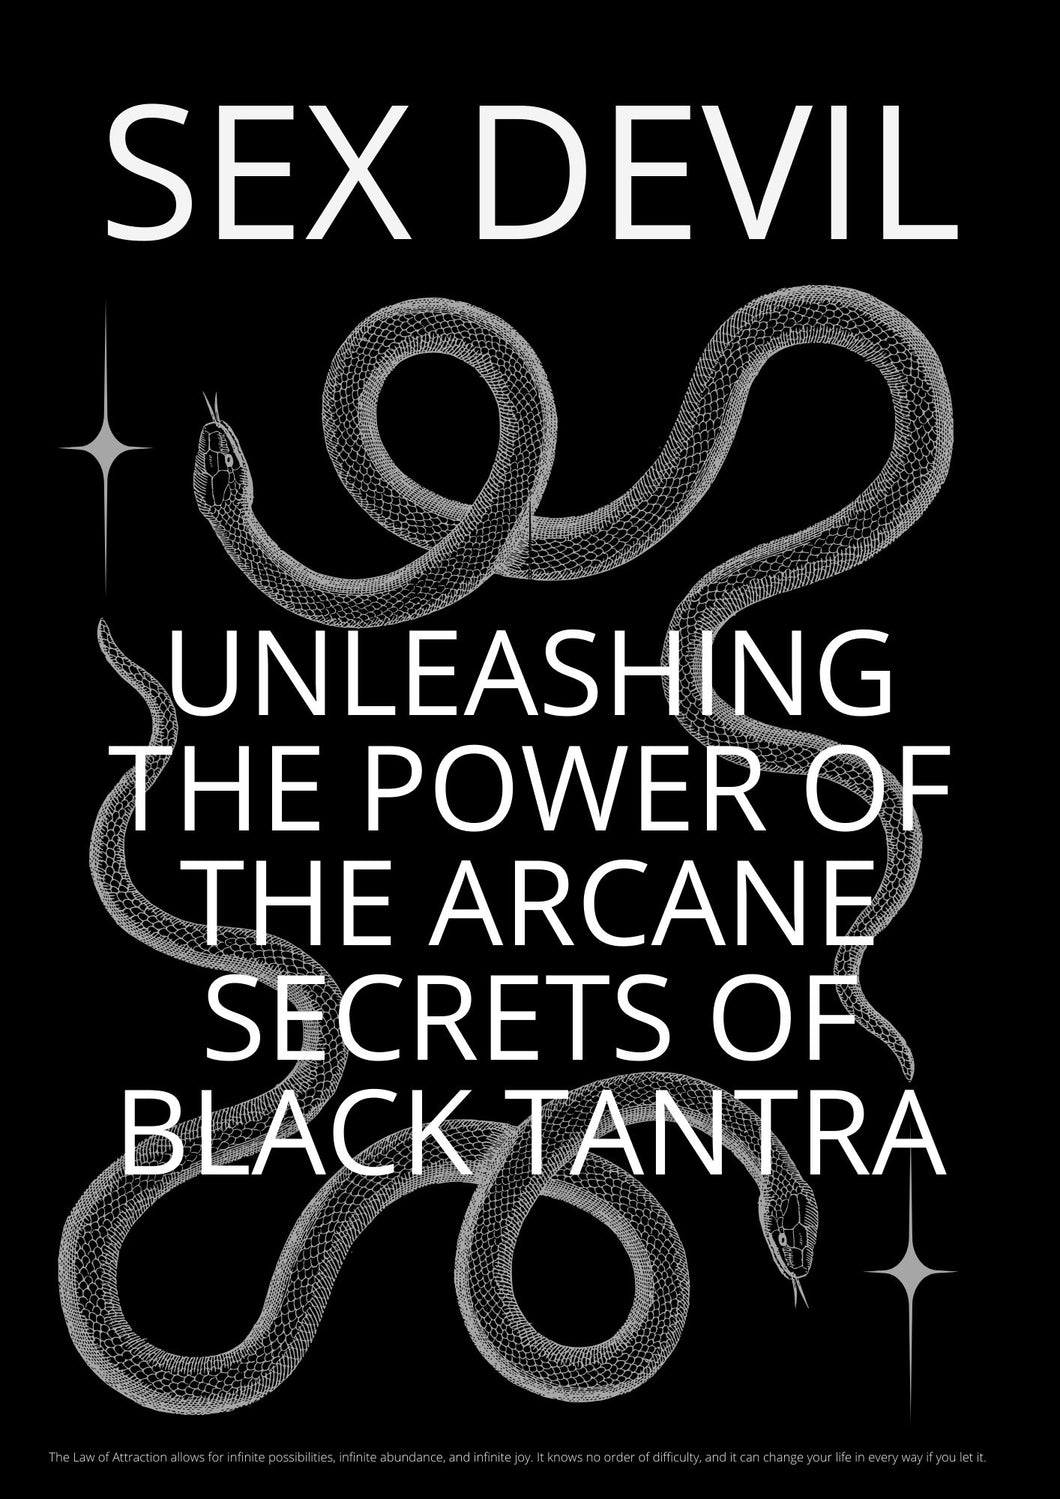 Sex Devil: Unleashing the Power of the Arcane Secrets of Black Tantra online course